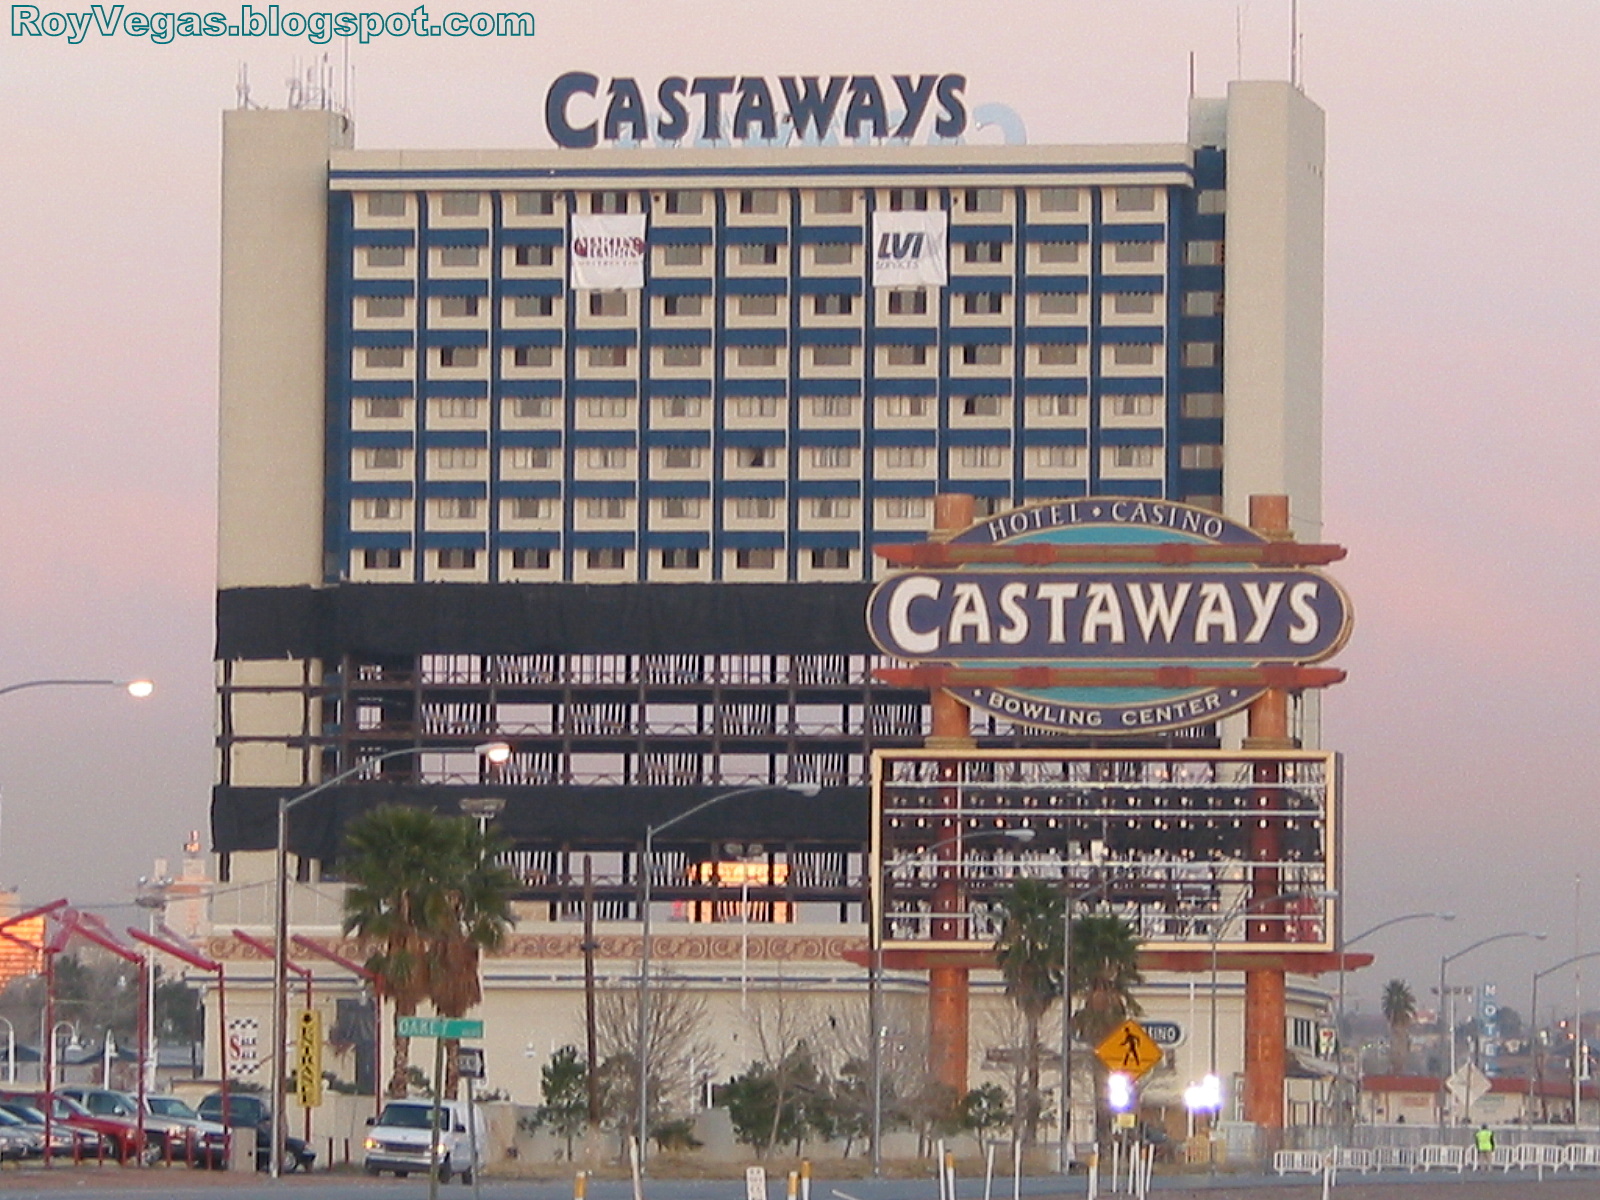 Roy Vegas Castaways Las Vegas The Implosion